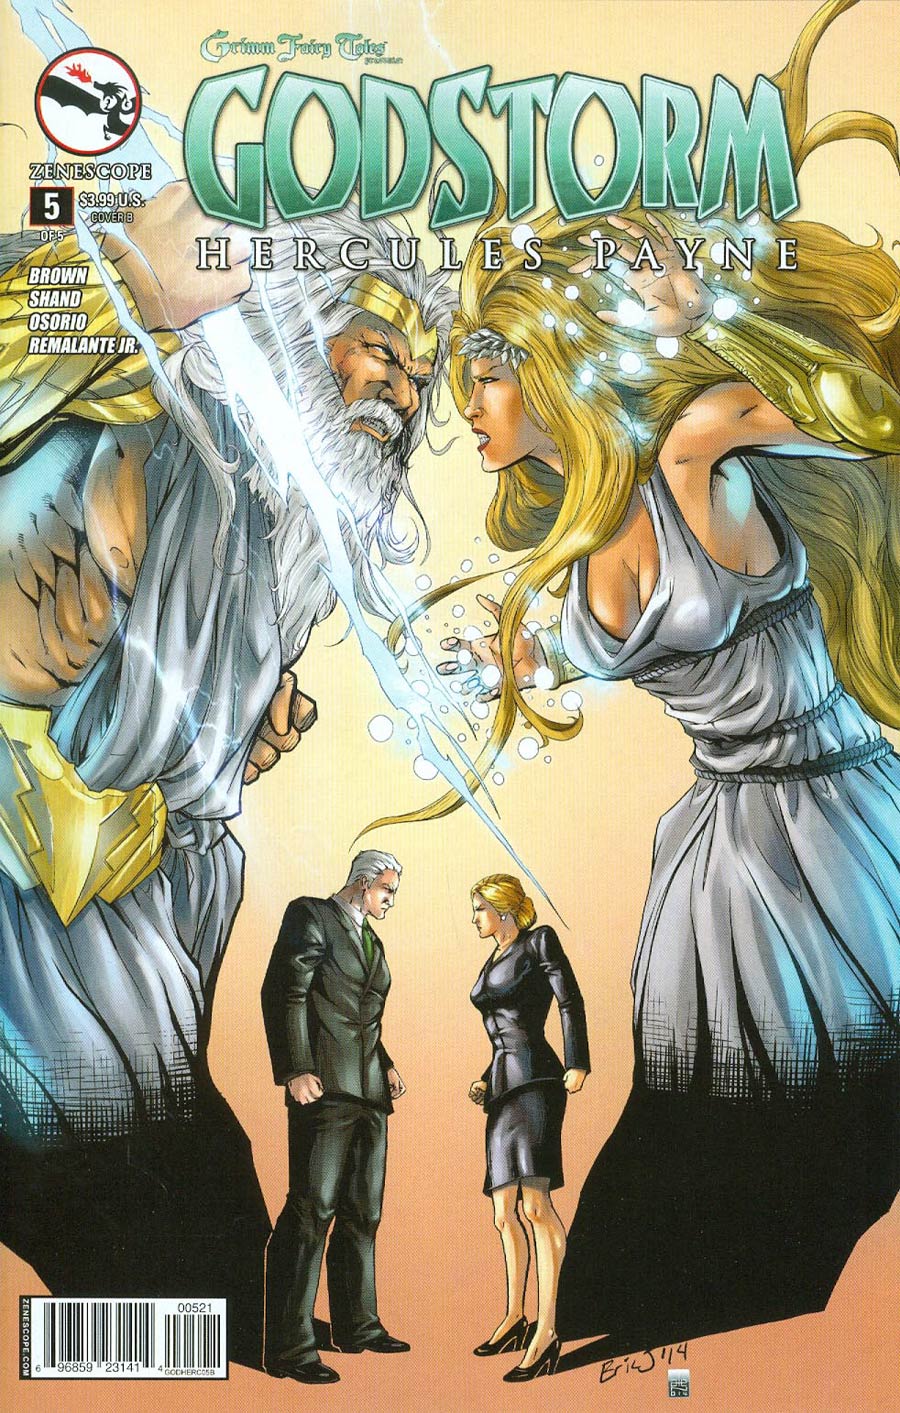 Grimm Fairy Tales Presents Godstorm Hercules Payne #5 Cover B Eric J